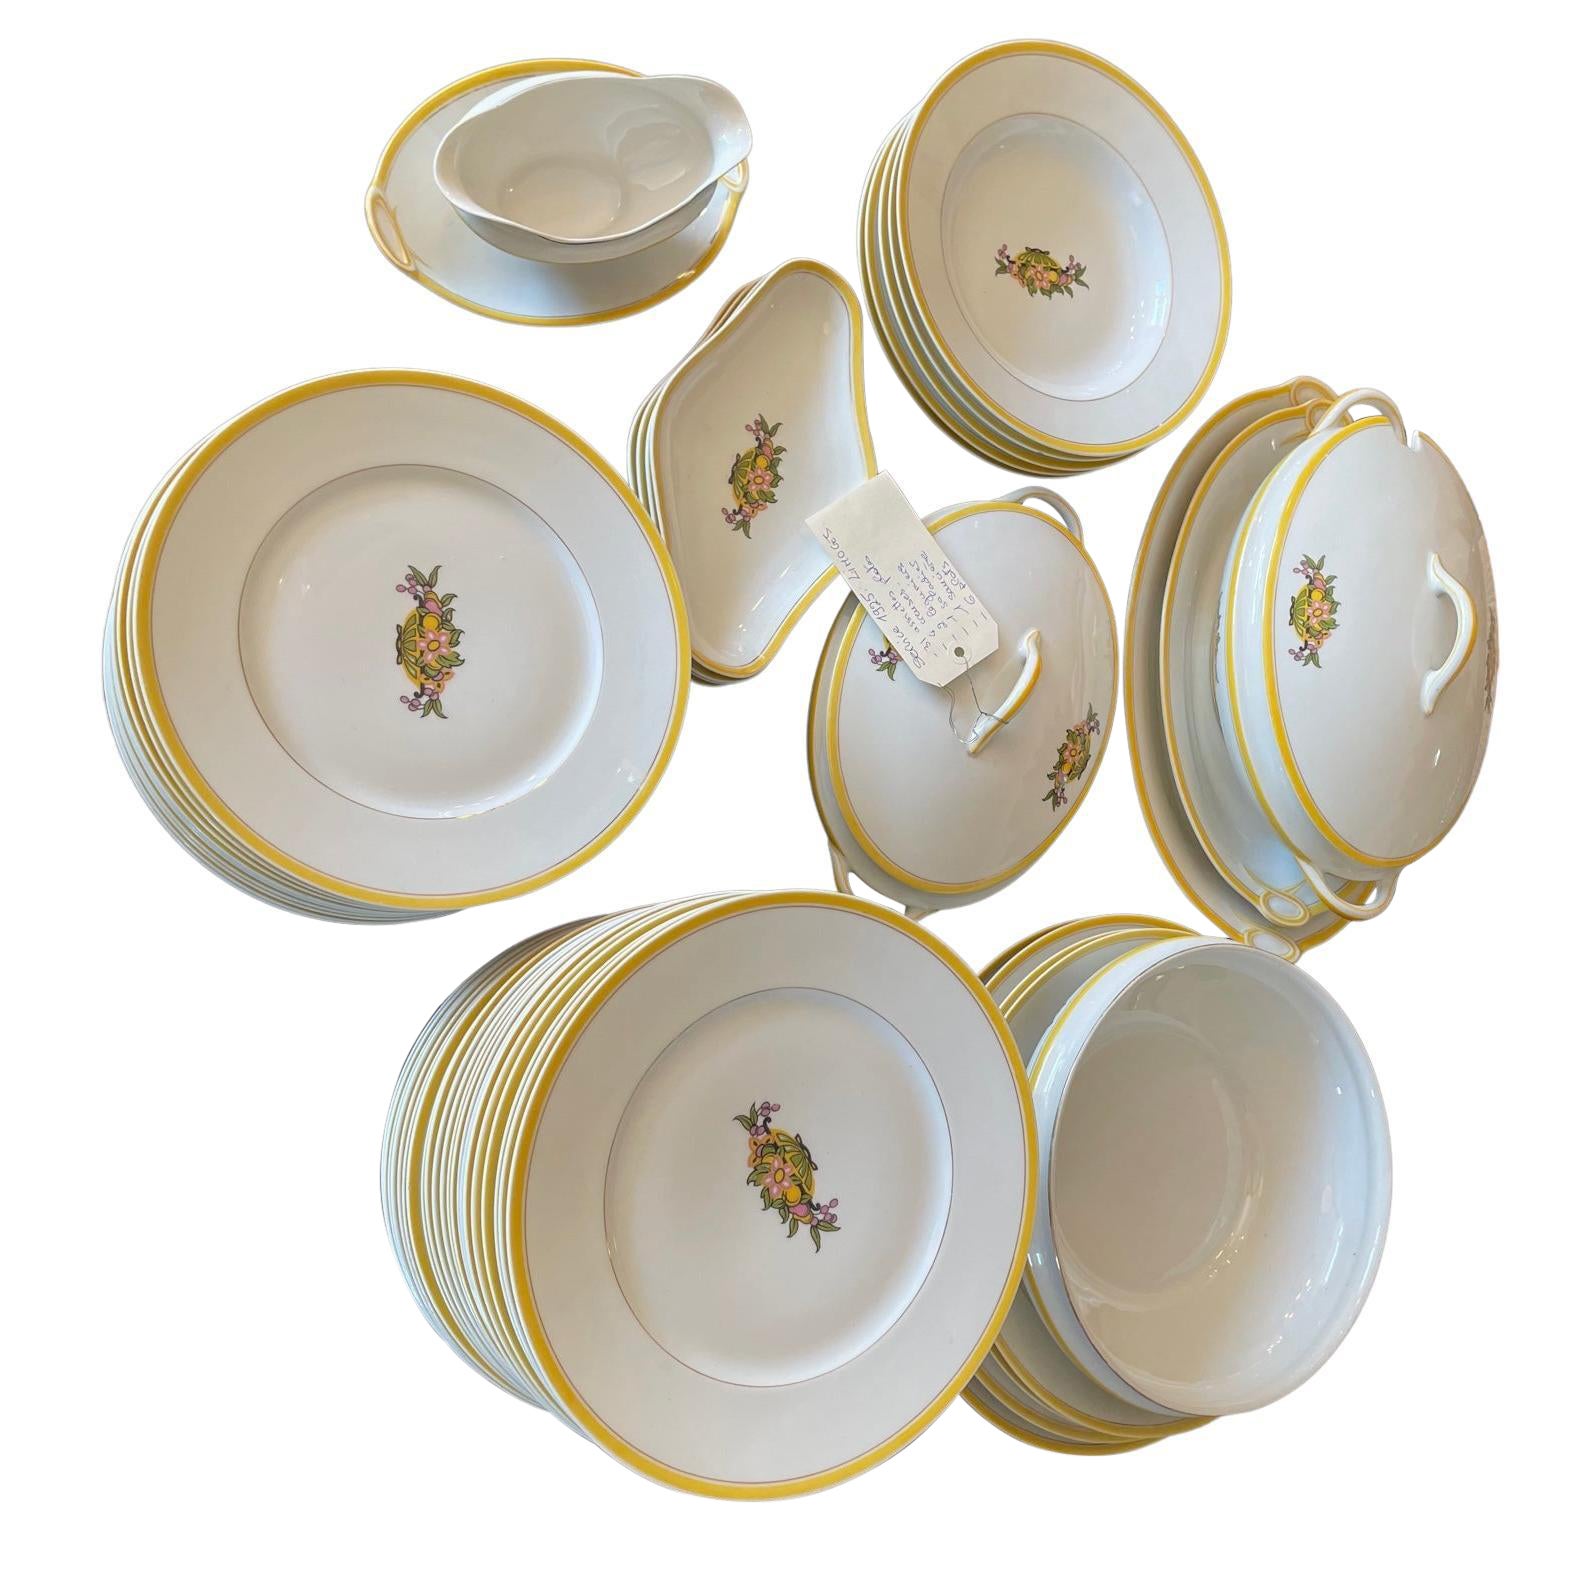 20th Century French Art Deco Limoges Porcelain Service Tableware 49 Pieces